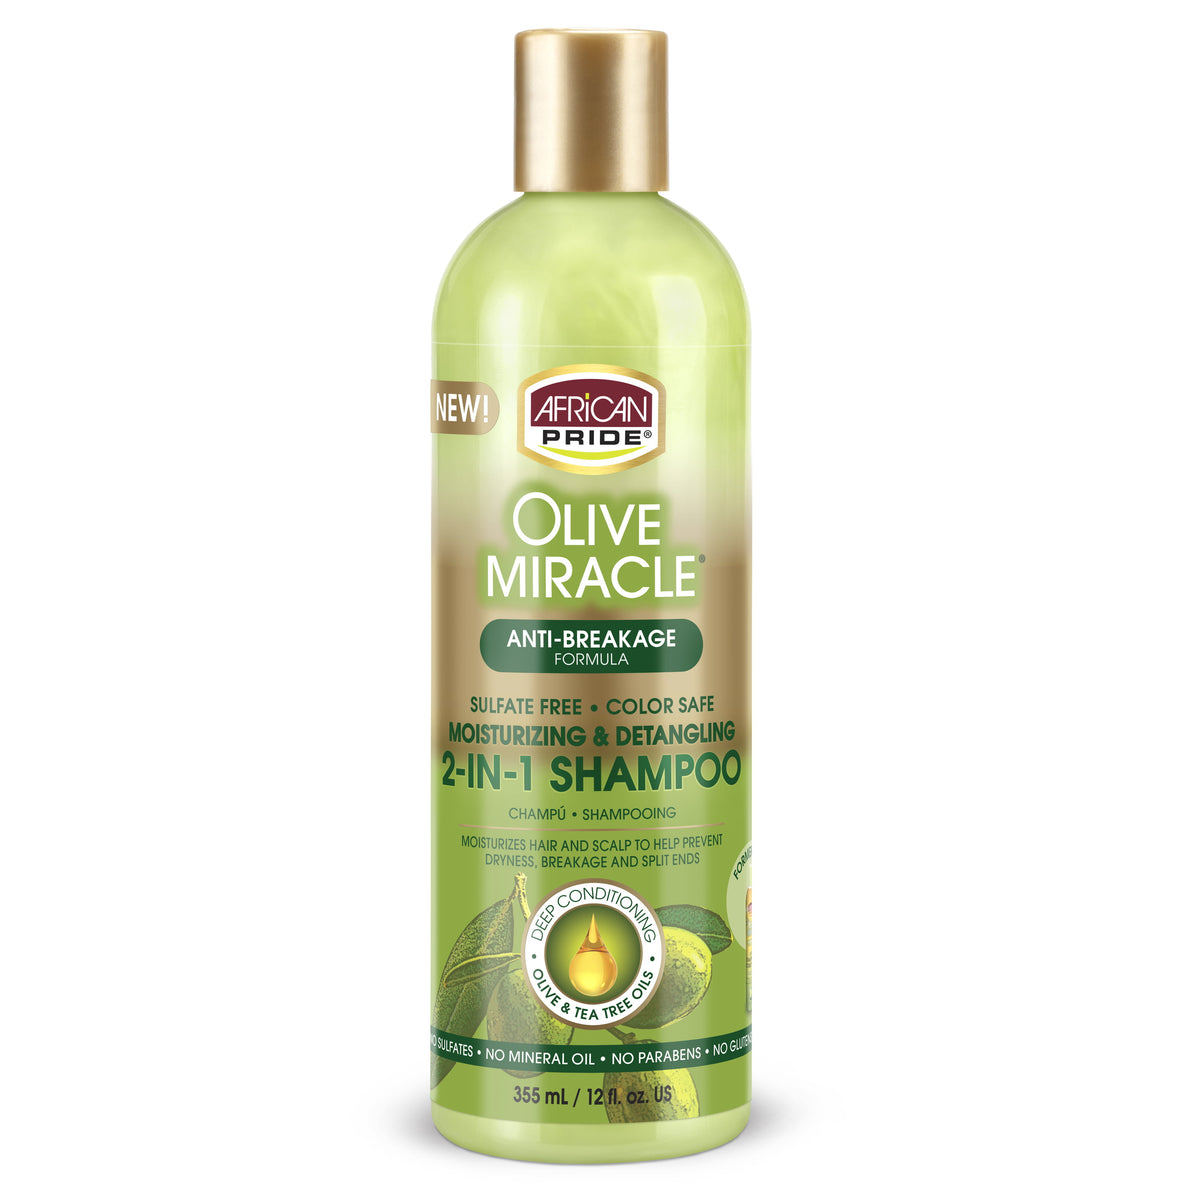 African Pride Olive Miracle Detangling Moisturizing Anti-Breakage Formula 2-in-1 Shampoo Plus Conditioner 12oz